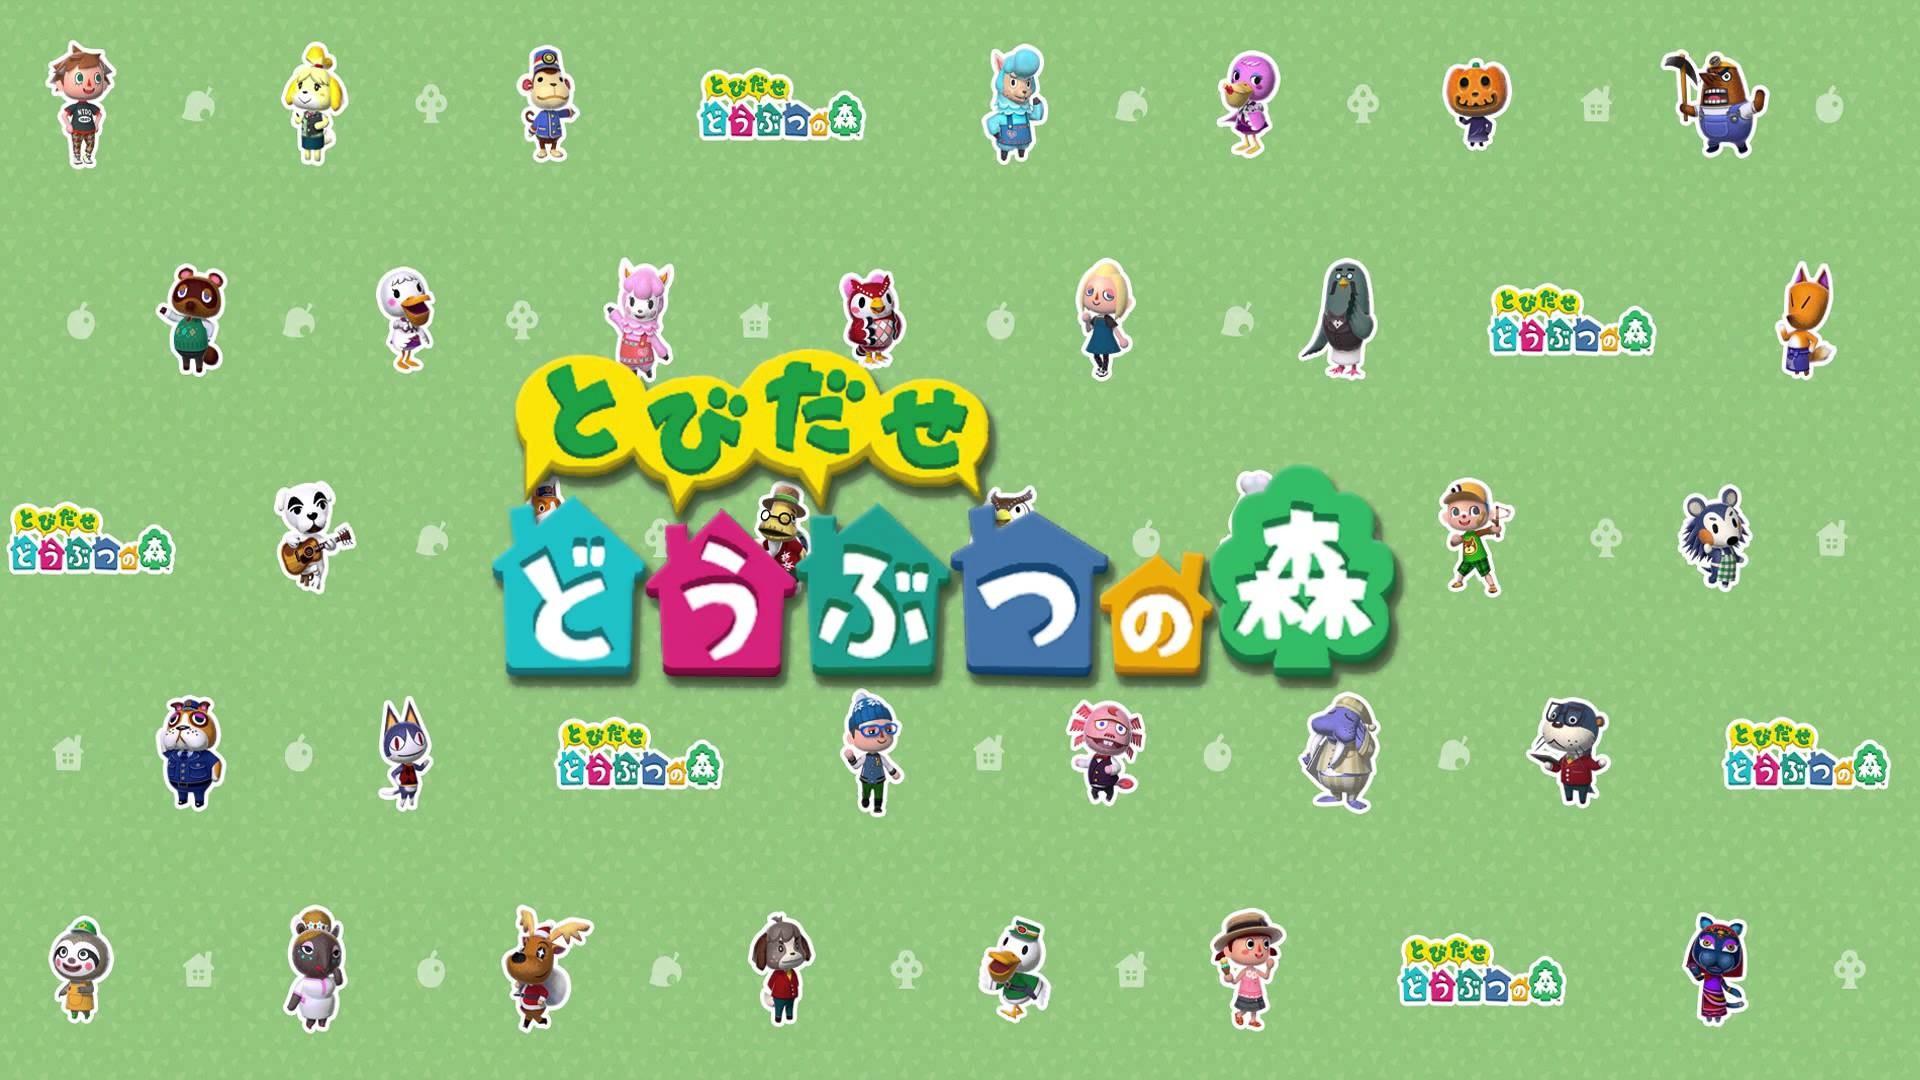 Animal Crossing Desktop Wallpaper